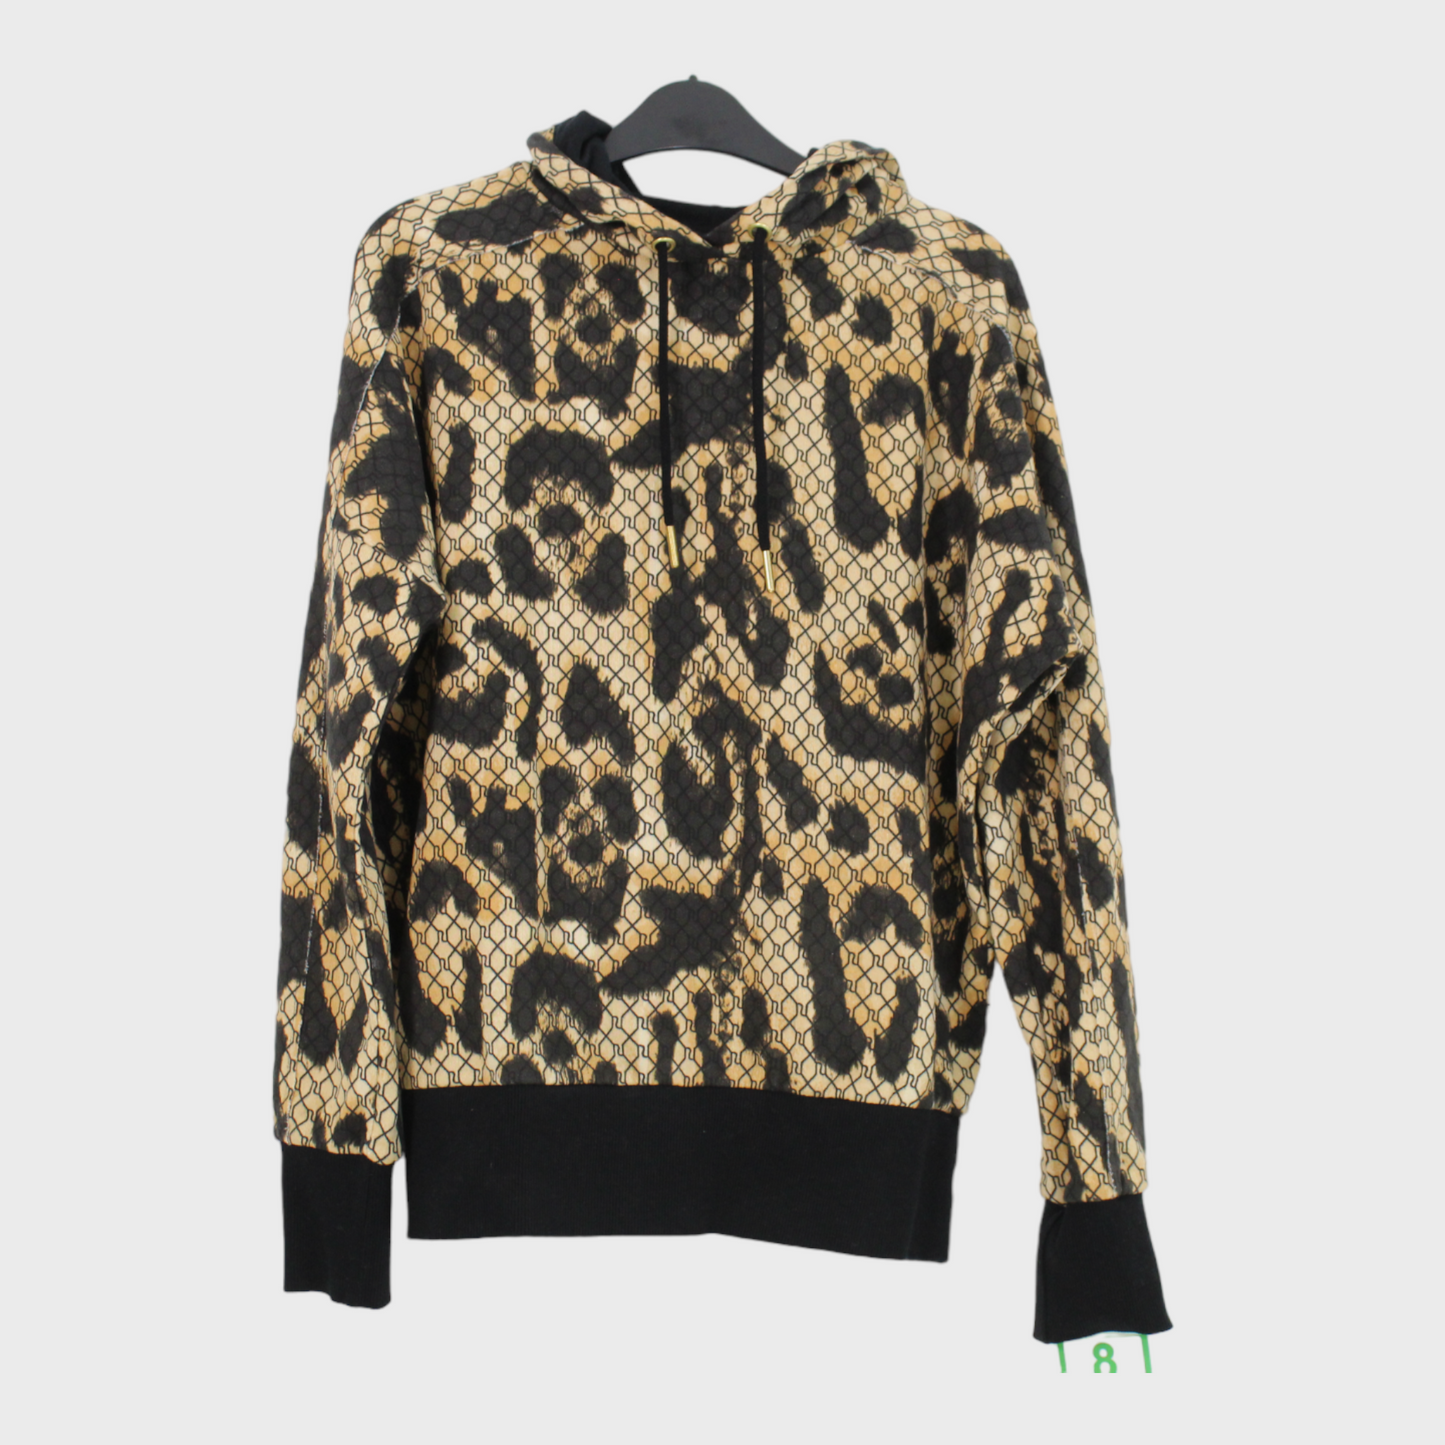 Womens Leopard Print Hooded Jumper - Size XS